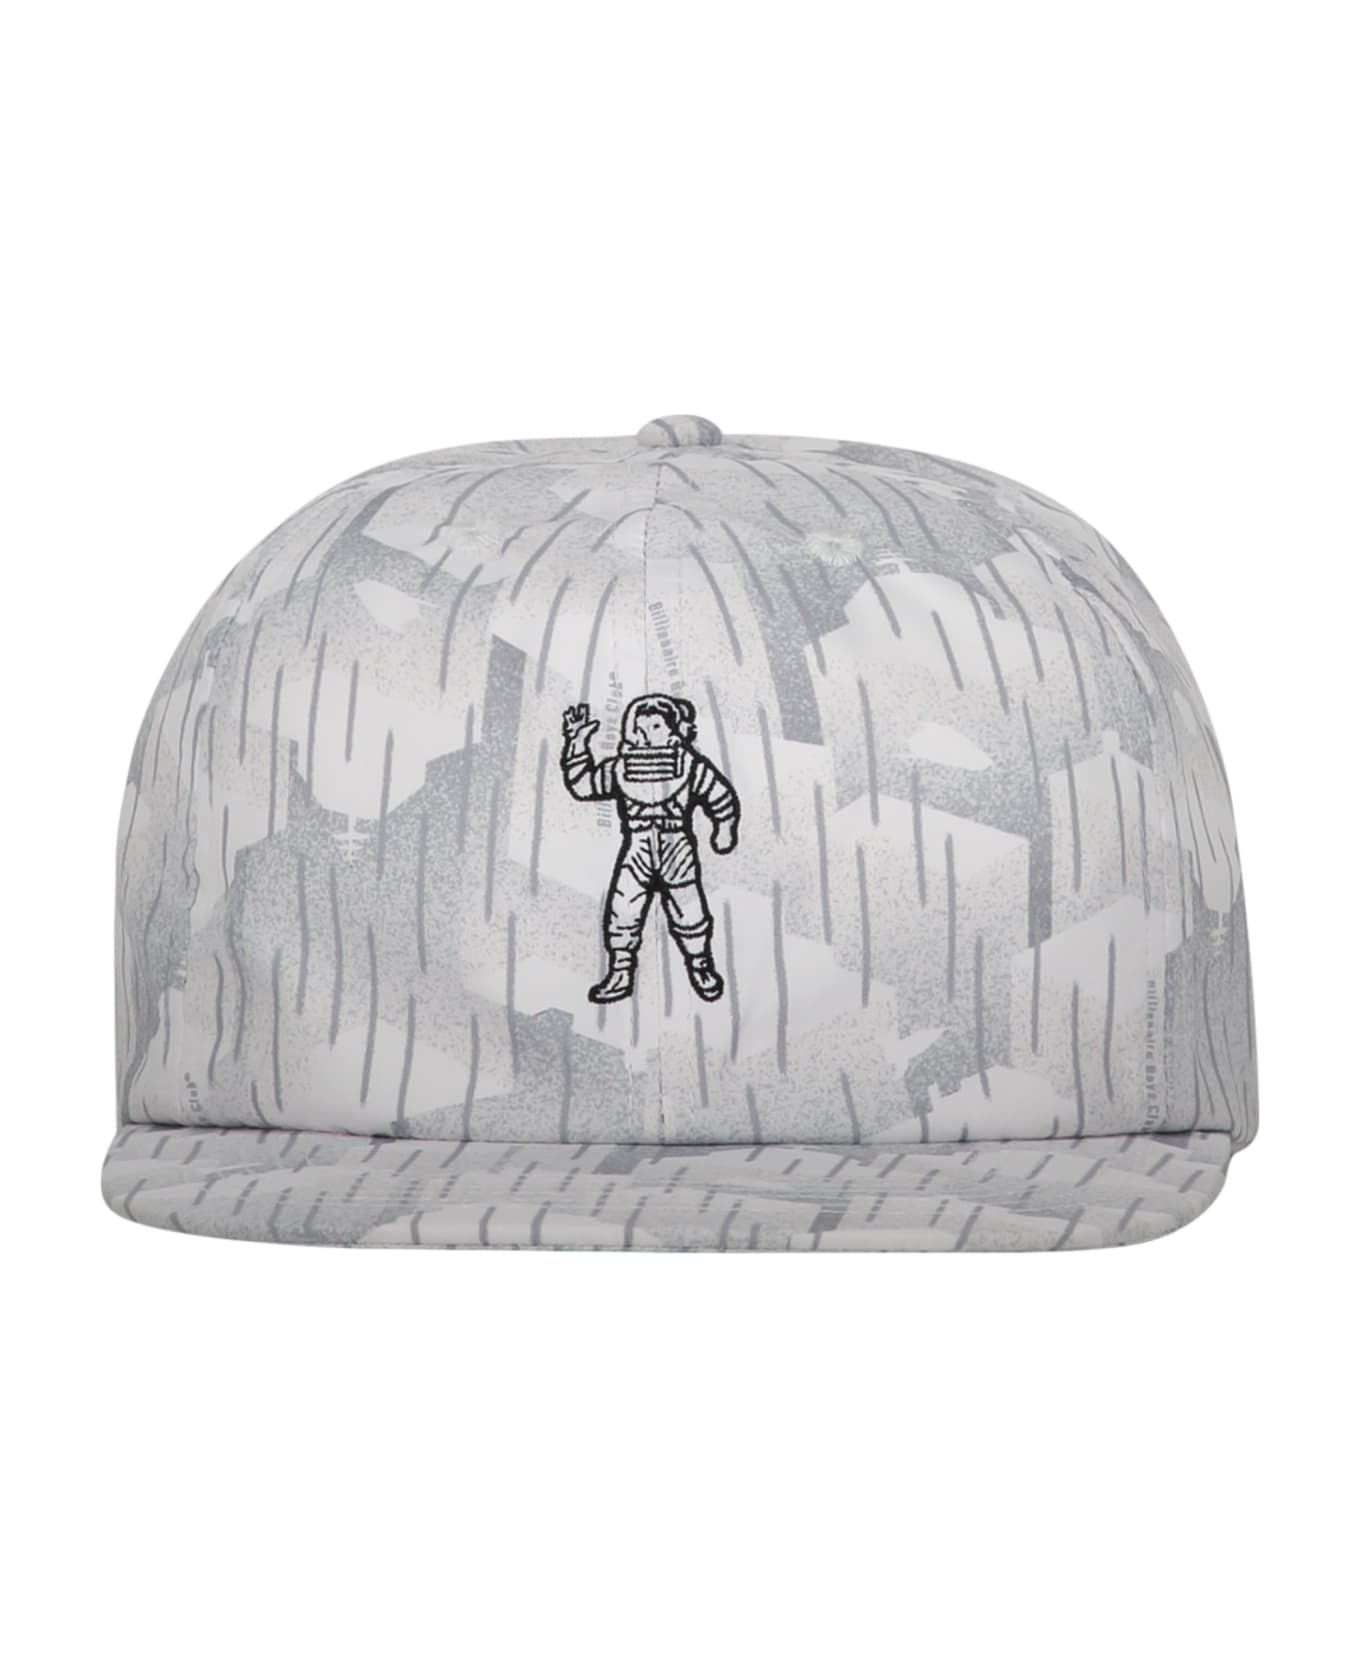 Billionaire Boys Club Baseball Hat With Flat Visor - grey 帽子